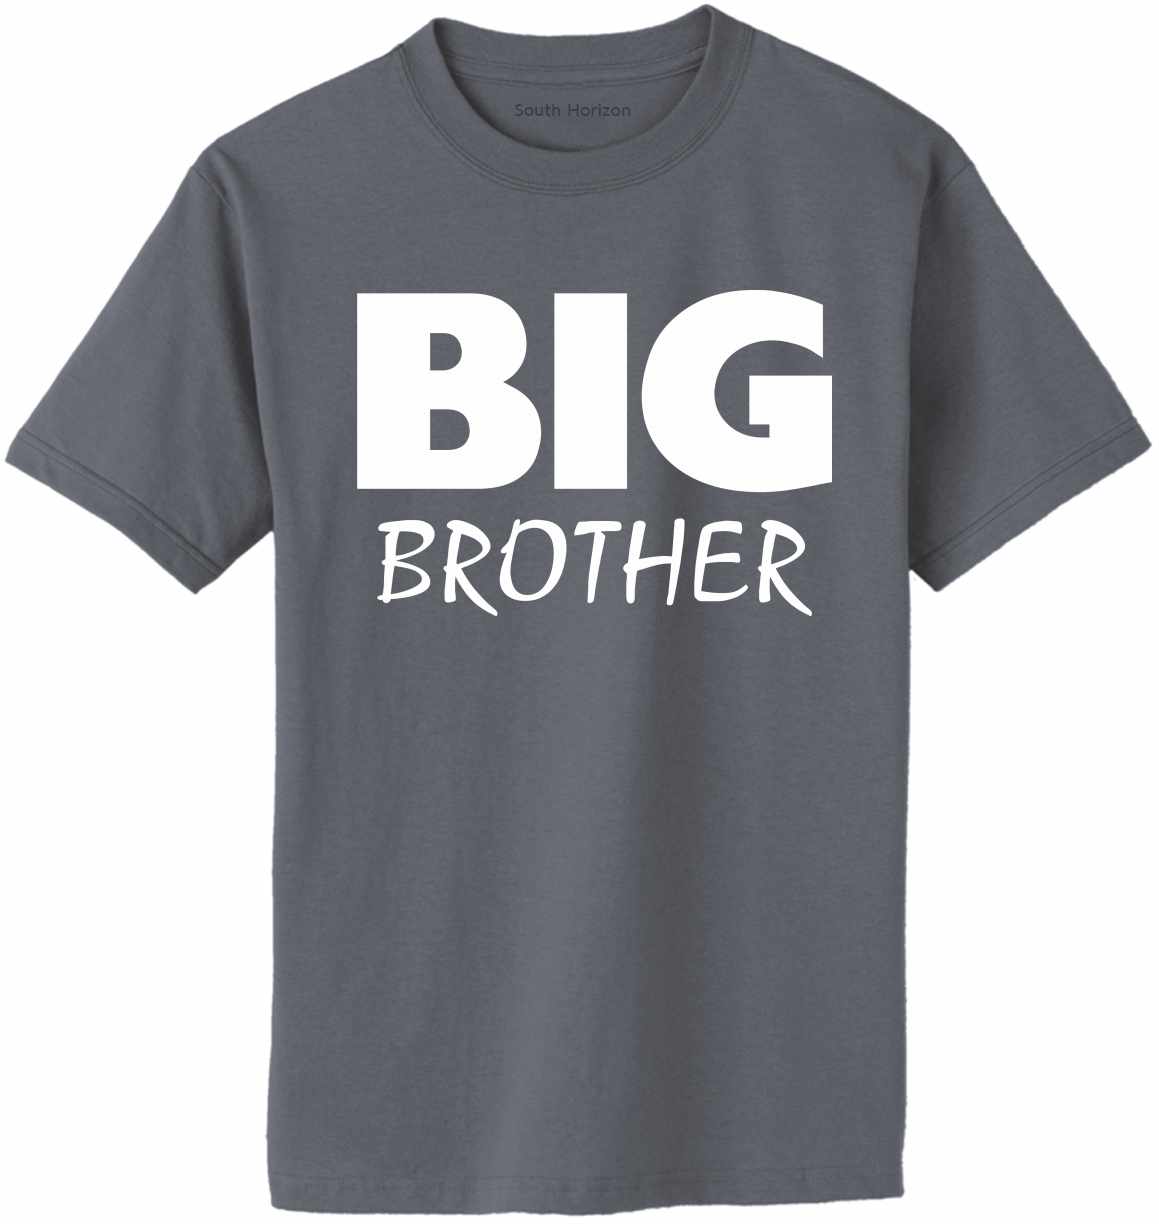 Big Brother Adult T-Shirt (#953-1)